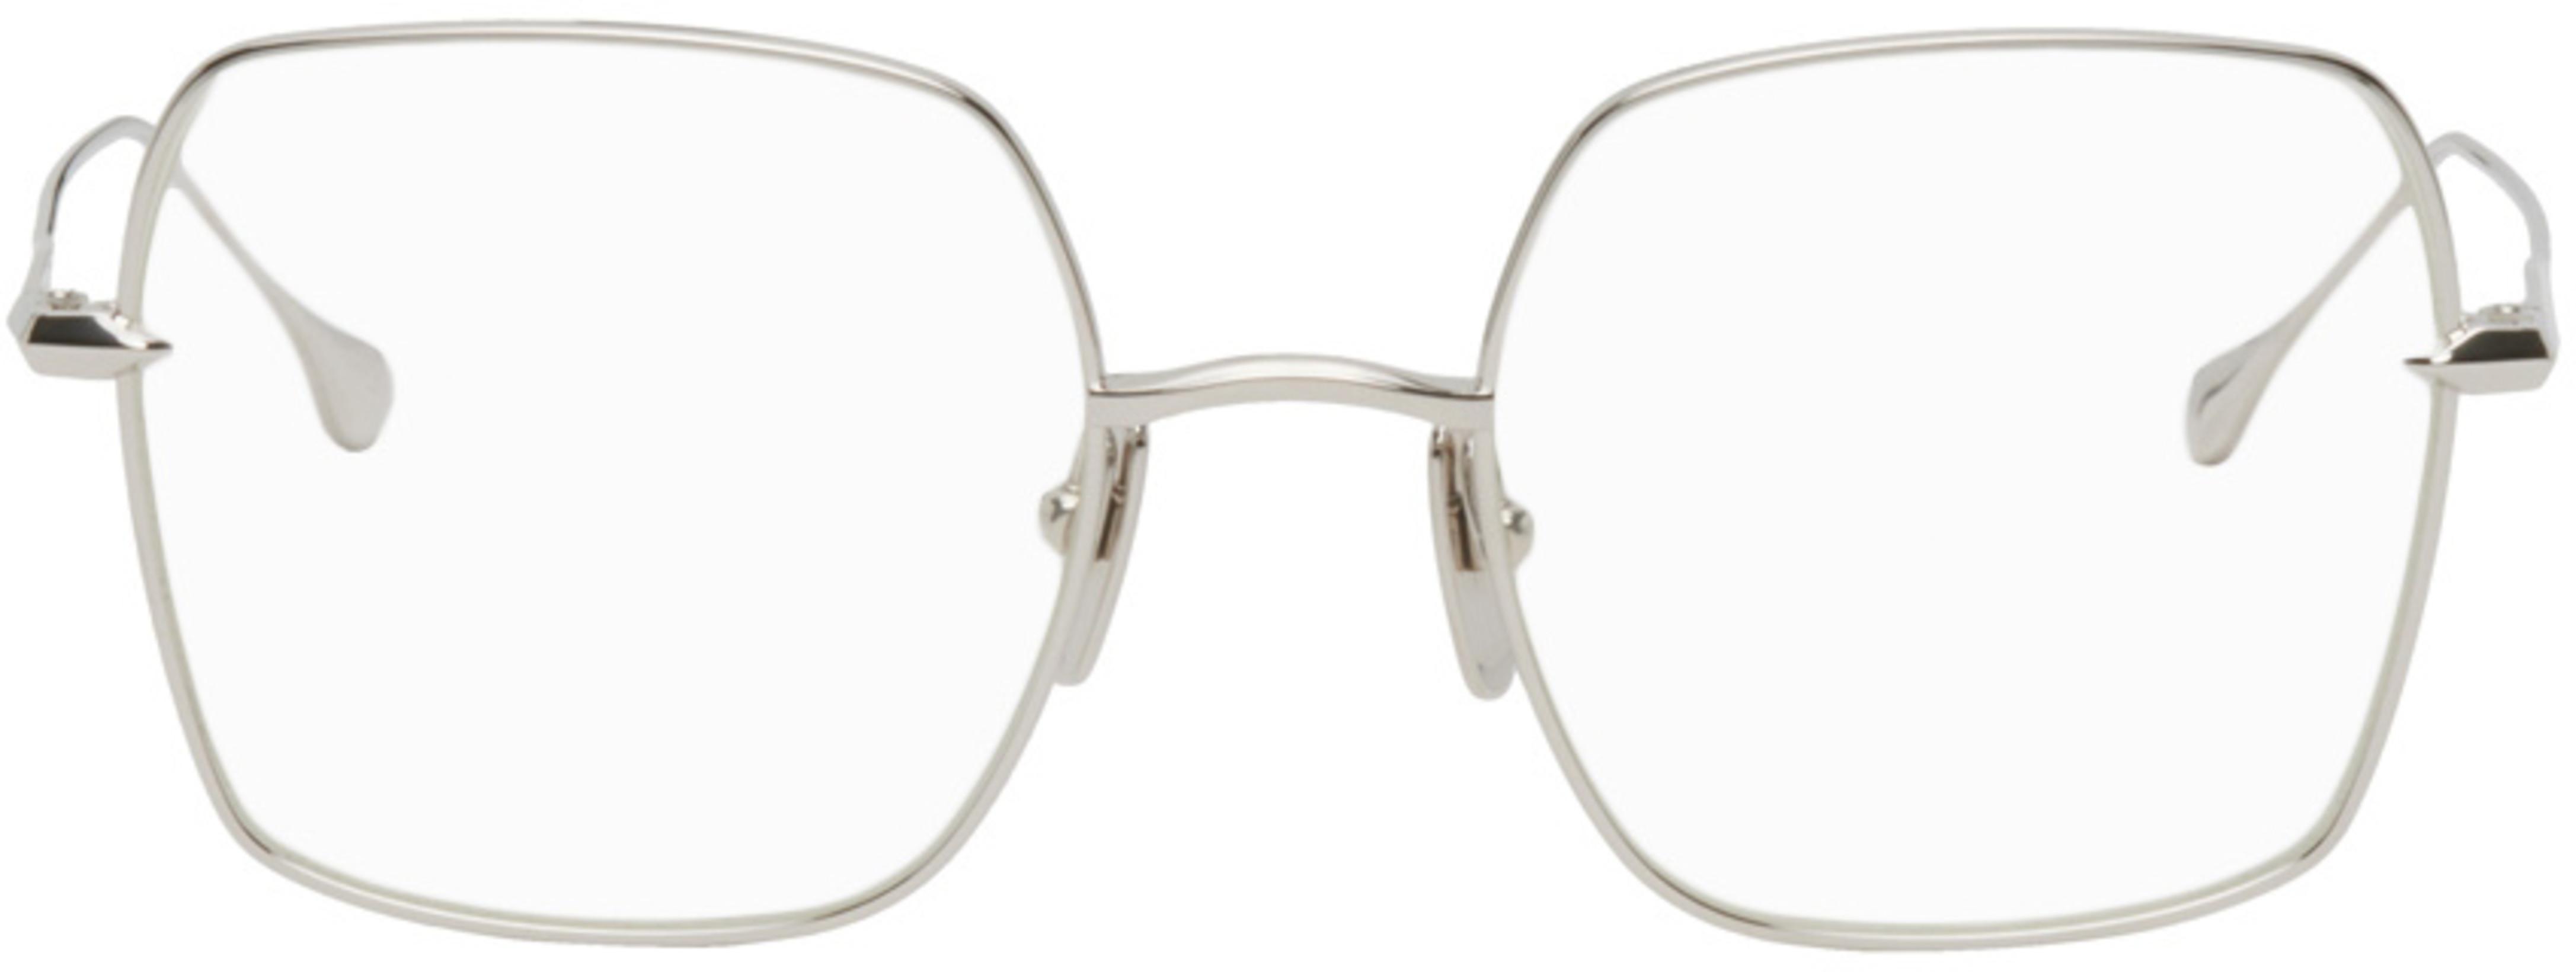 Silver Cerebal Glasses by DITA